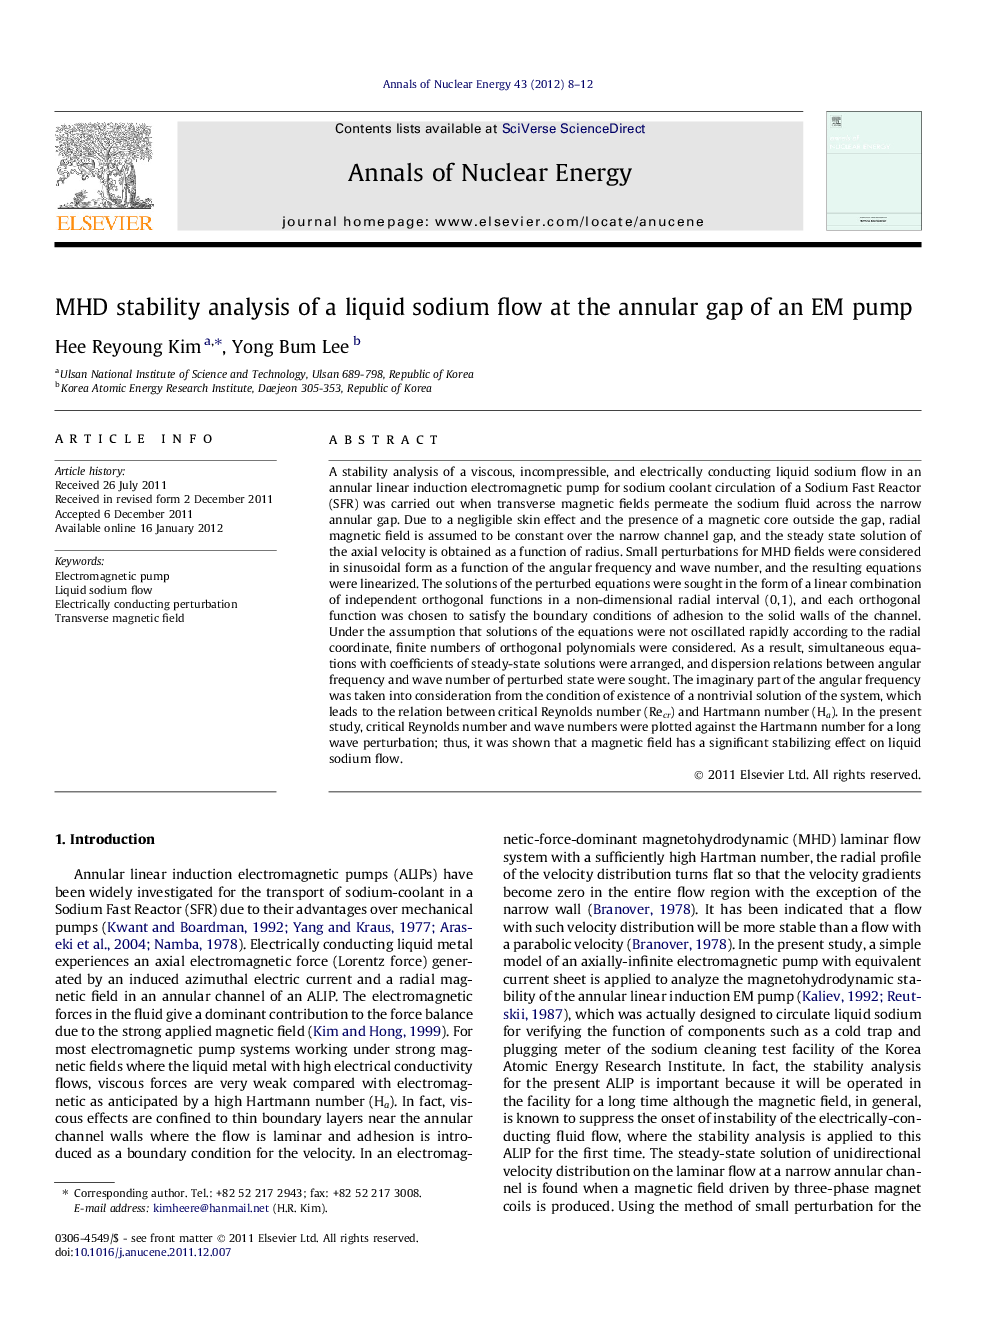 MHD stability analysis of a liquid sodium flow at the annular gap of an EM pump